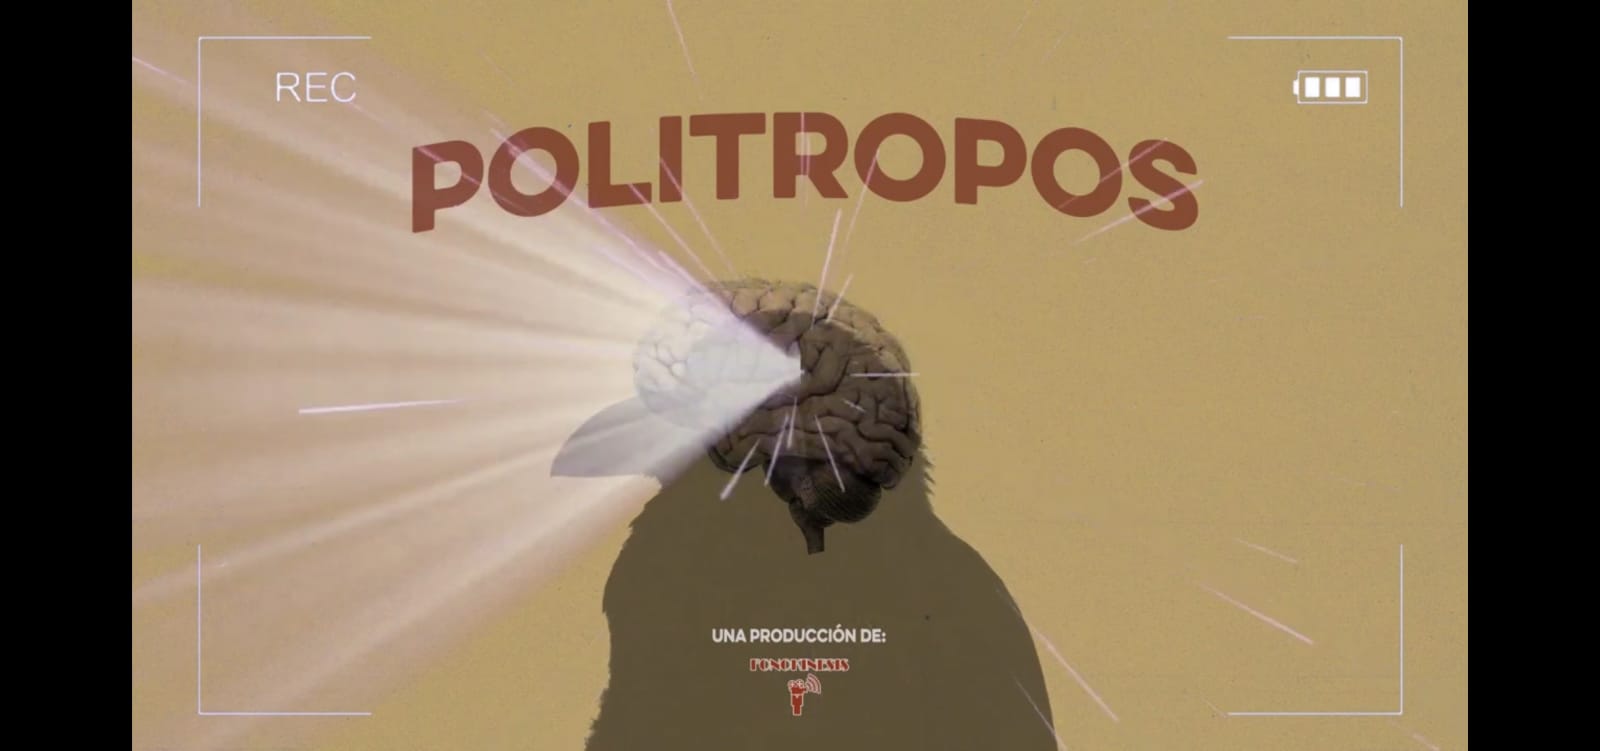 Politropos